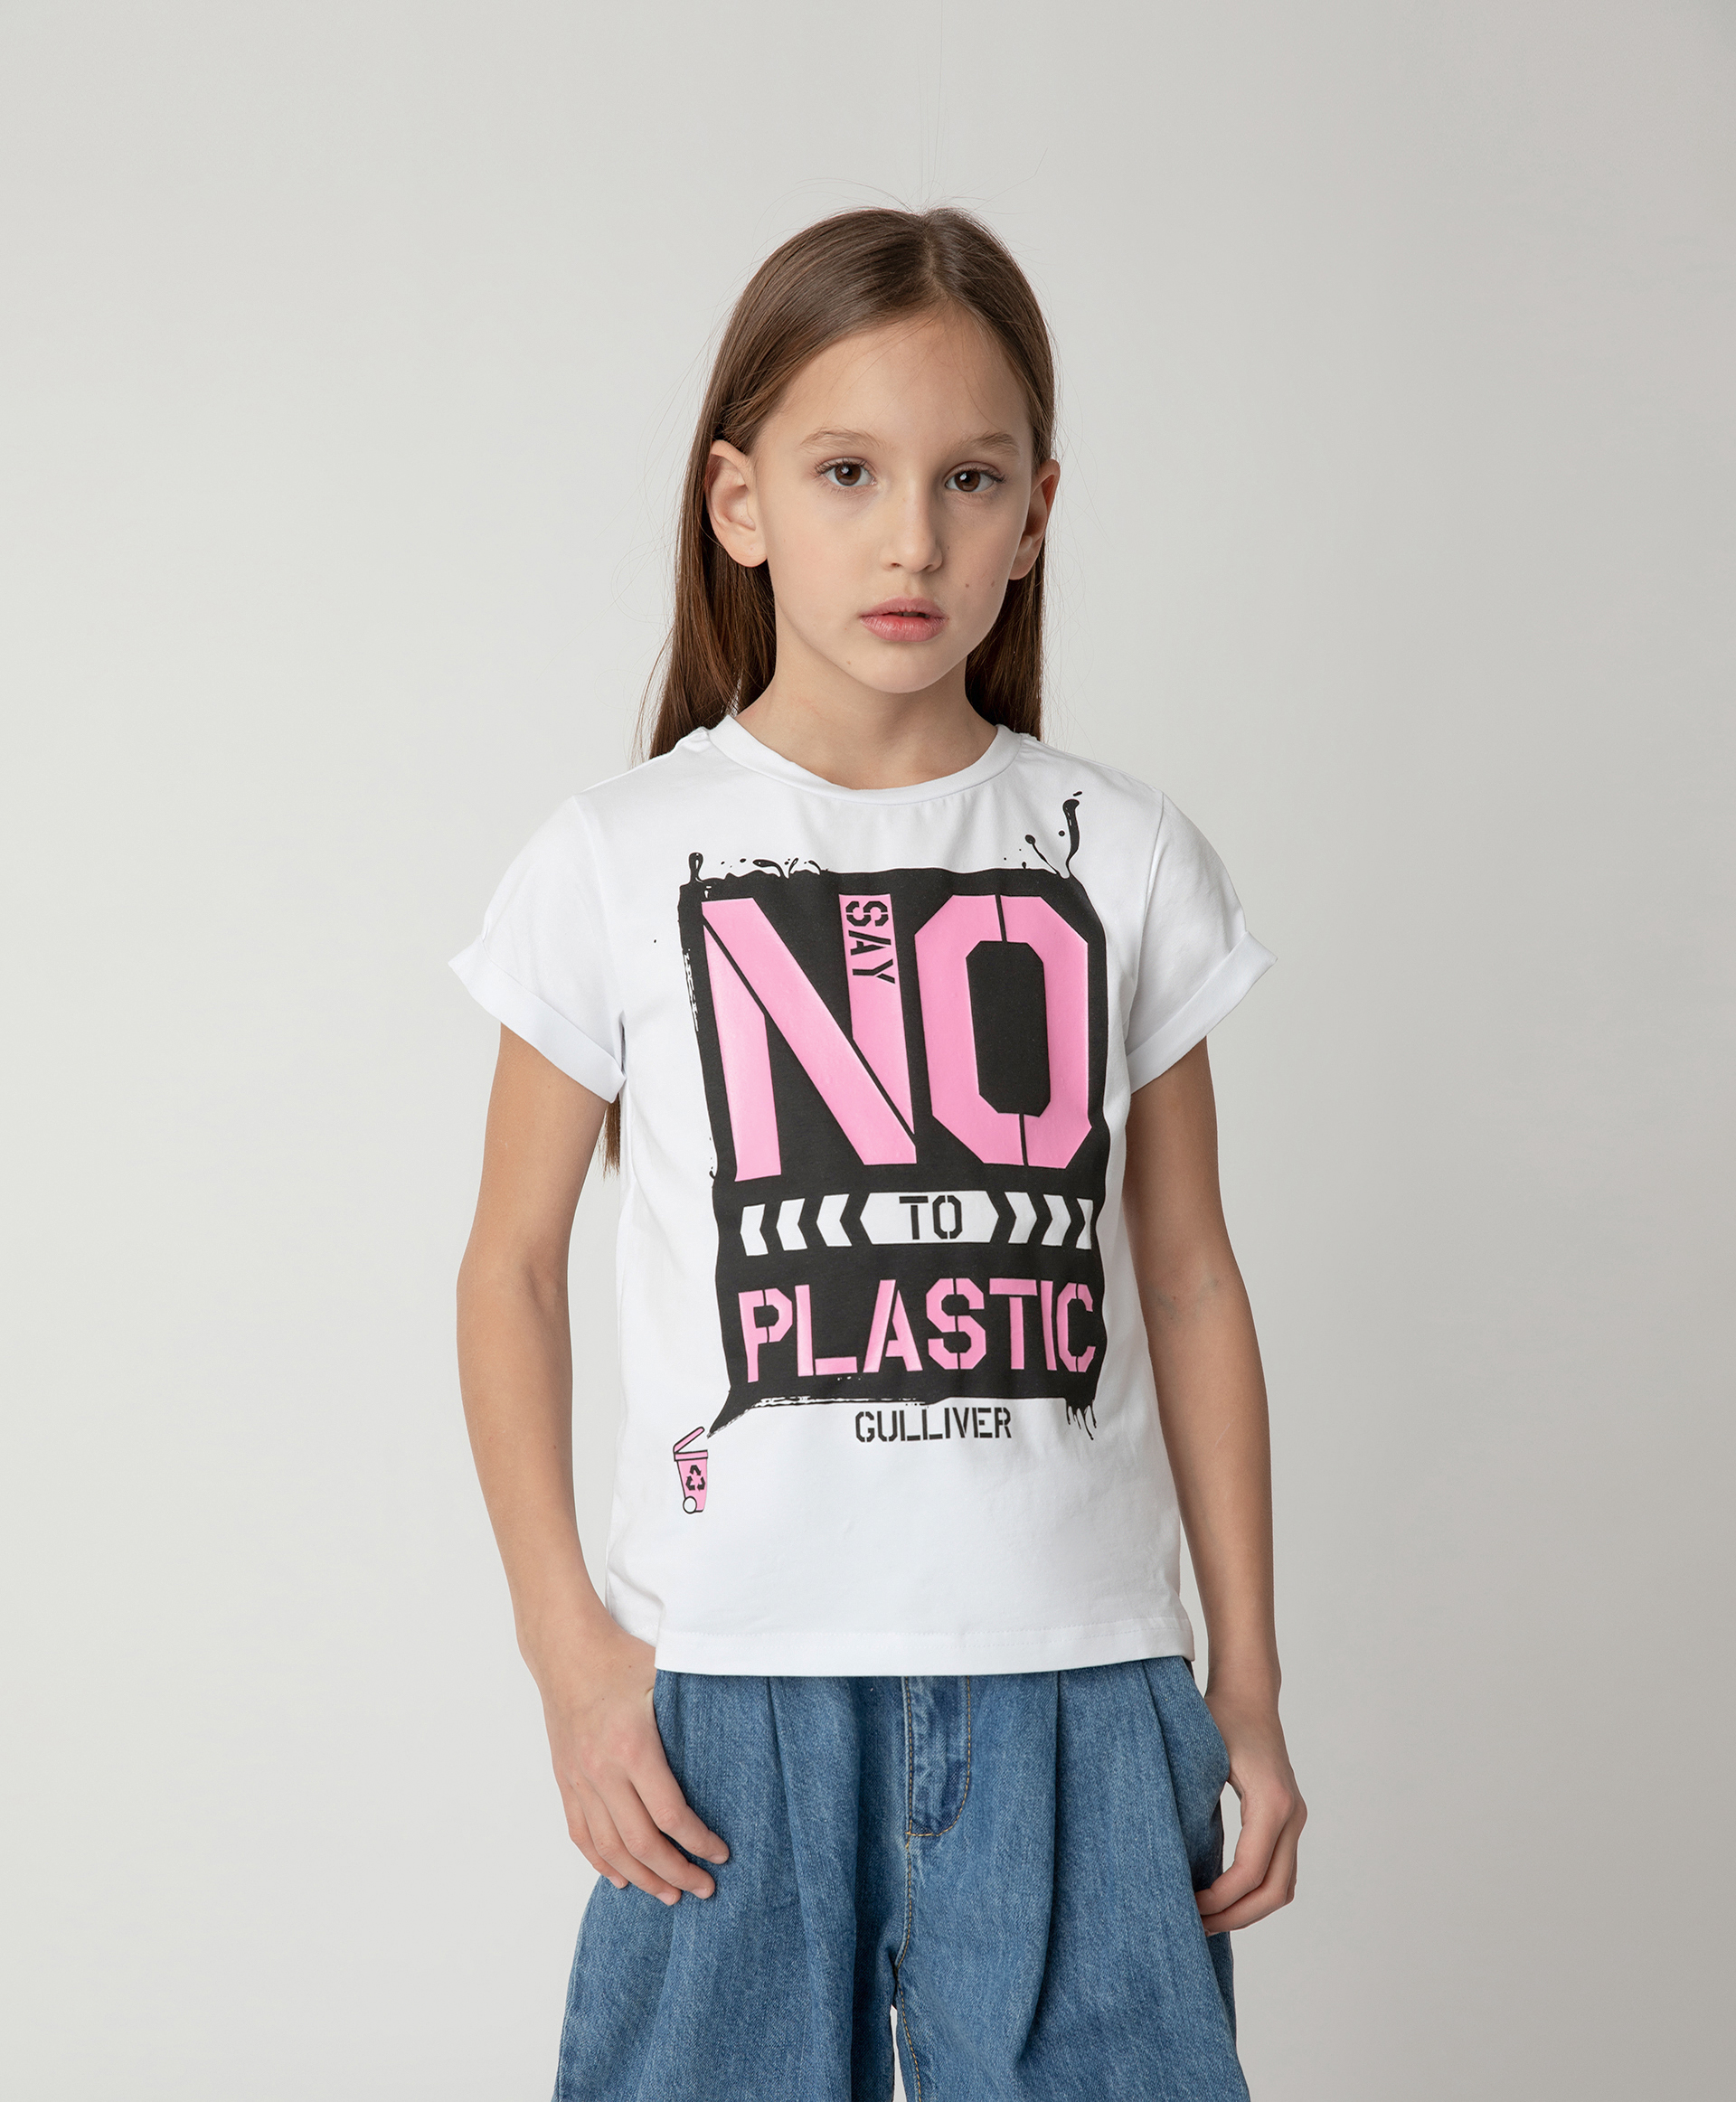 Футболка Say No To Plastic для девочки Gulliver 120FGJC1201, размер 134, цвет белый - фото 1